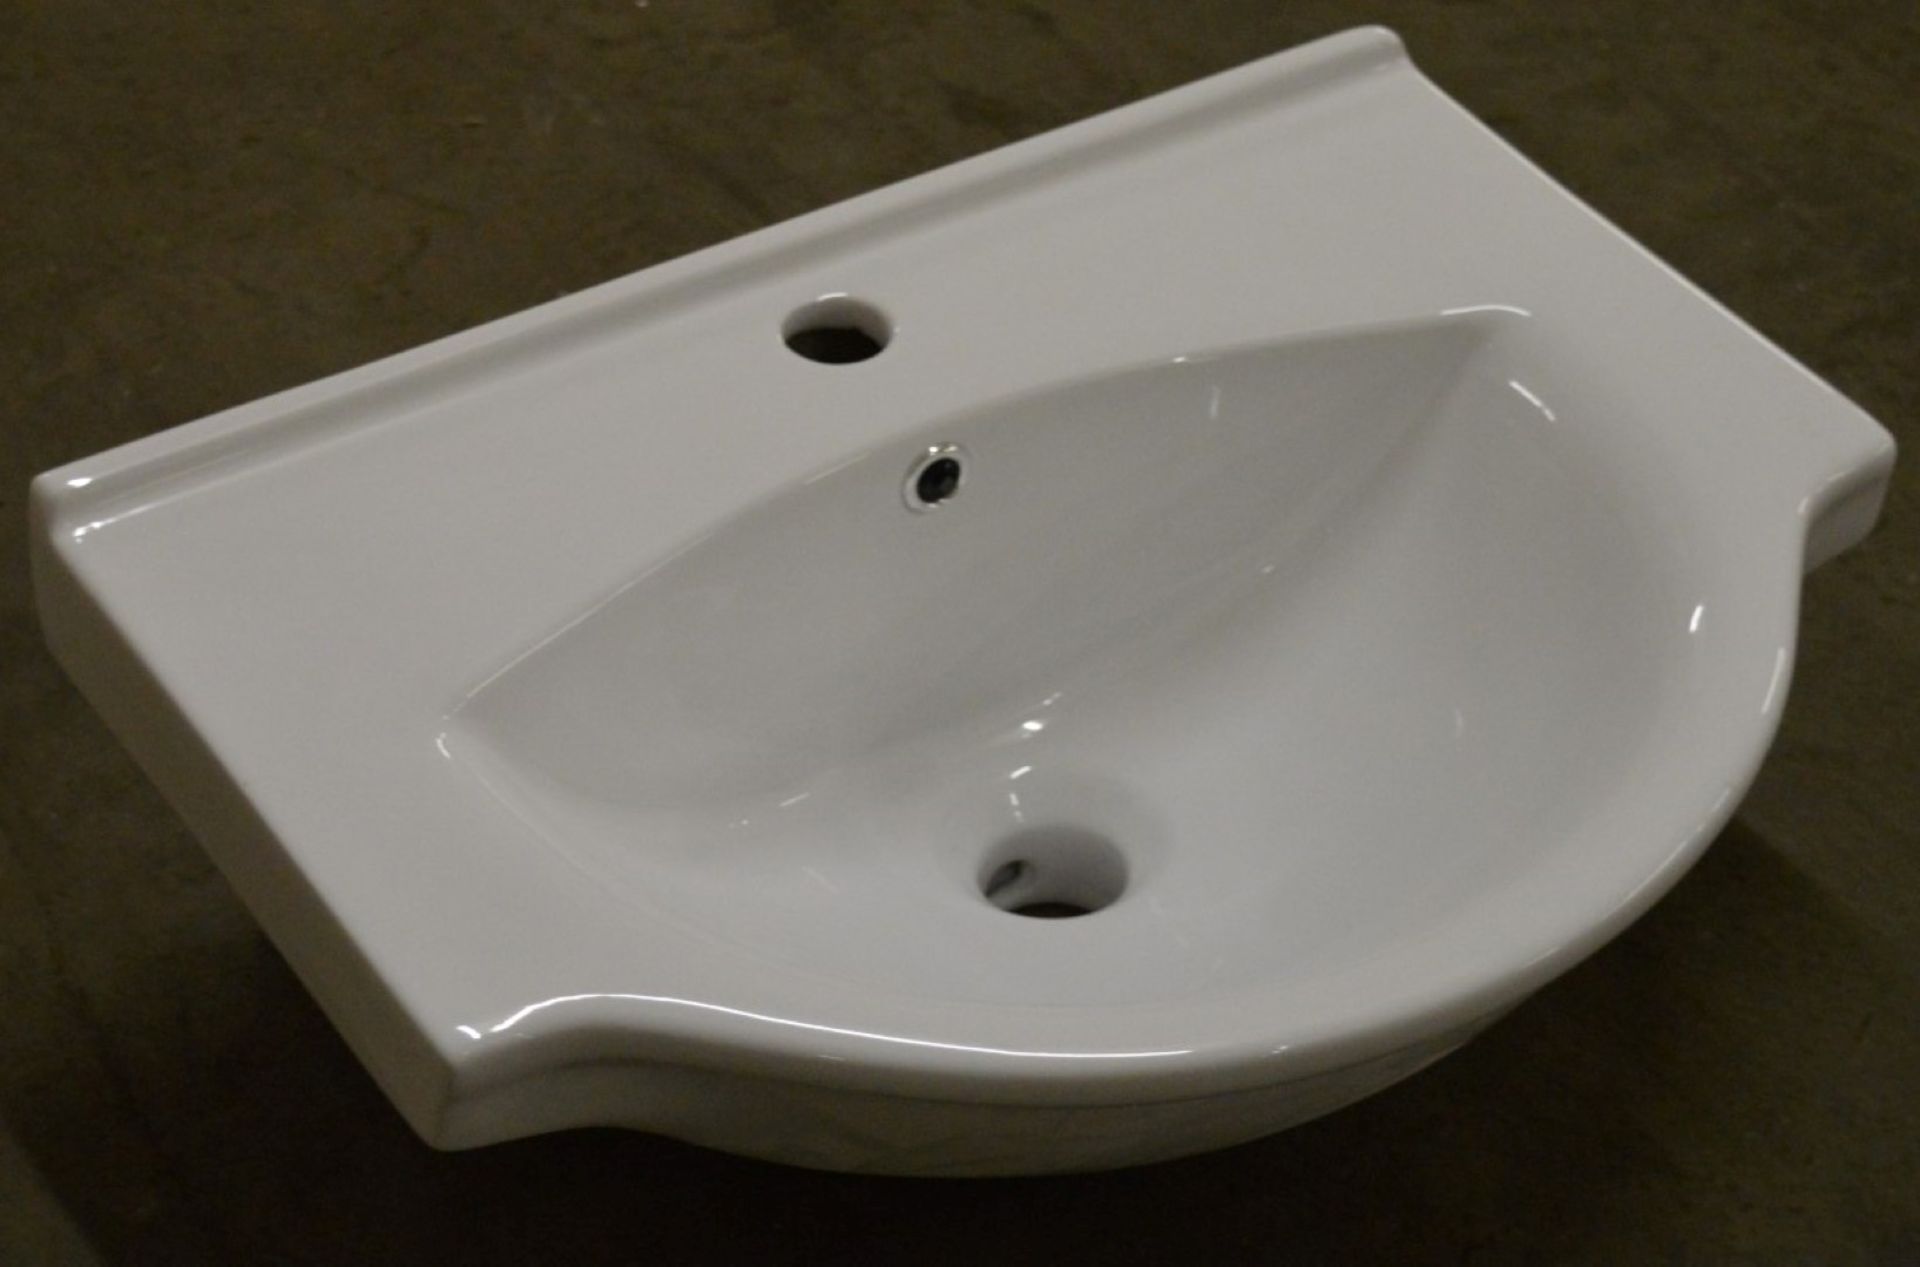 10 x Vogue Bathrooms LUNA Semi Recessed Bathroom Sink Basins - High Quality Ceramic Sink Basin - - Image 4 of 4